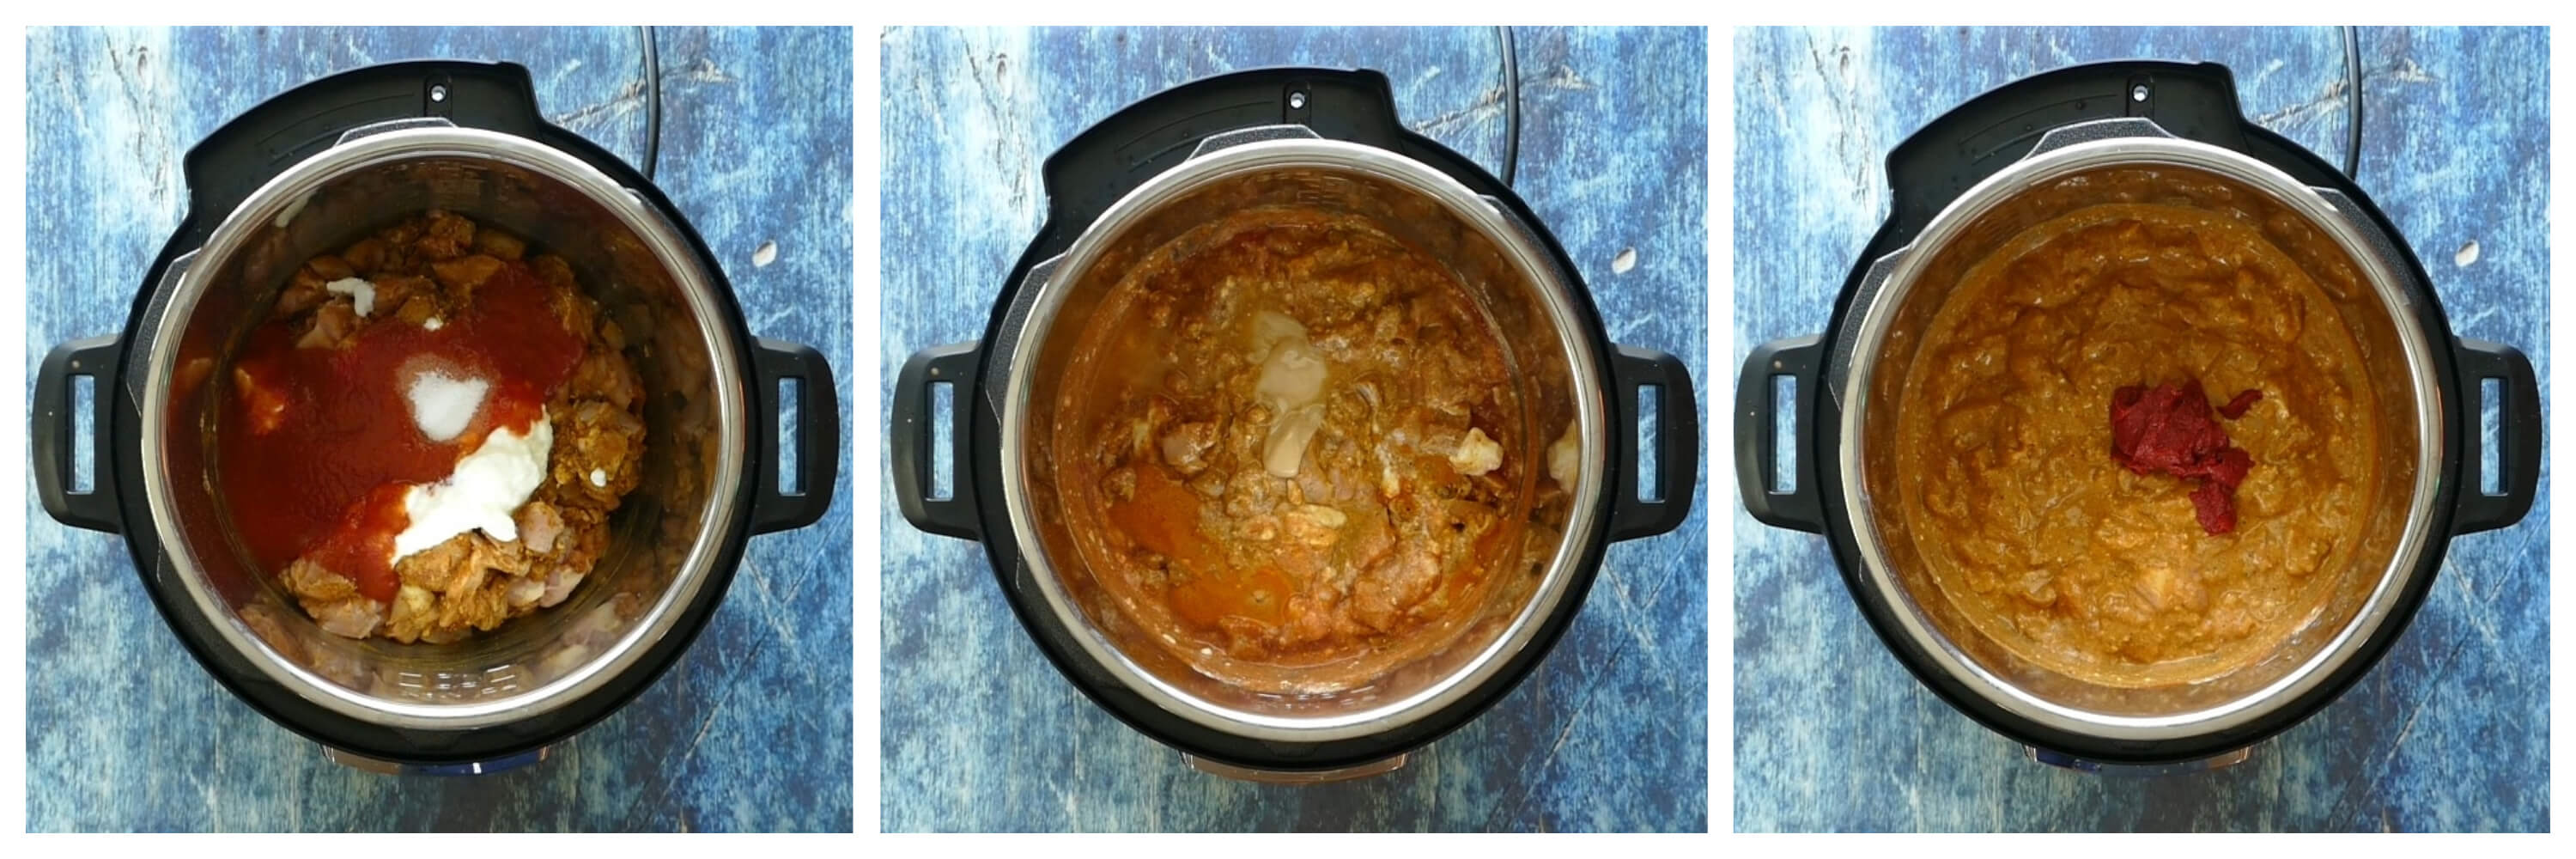 Instant Pot Chicken Tikka Masala Instructions 3 collage - add tomato sauce, yogurt, salt on chicken; add honey; stir and add tomato paste - Paint the Kitchen Red